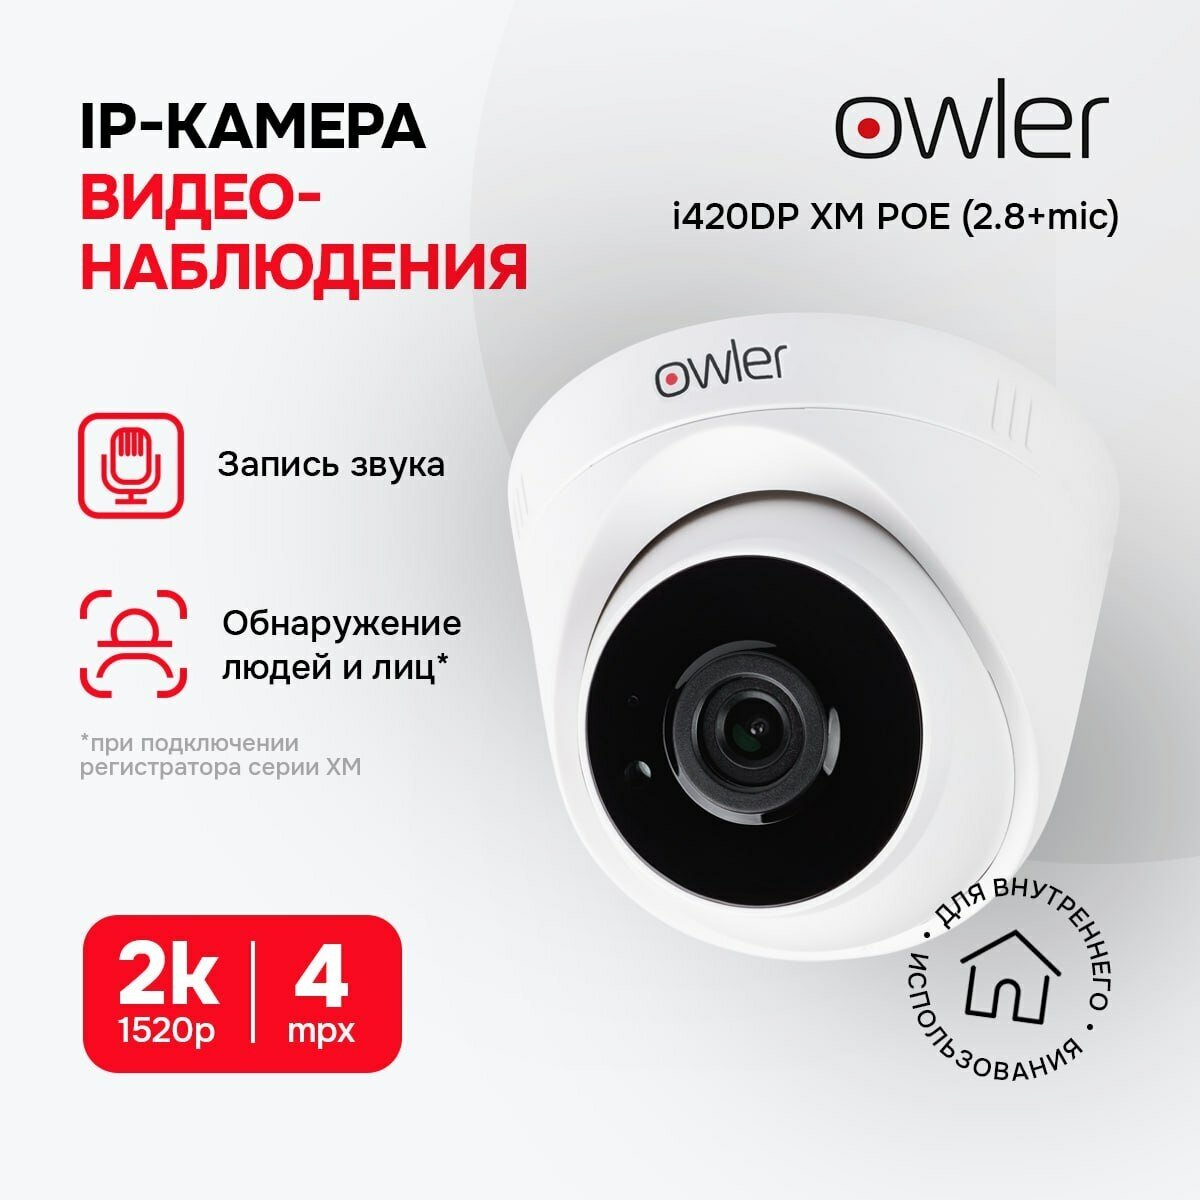 IP видеокамера Owler i420DP XM POE (2.8+mic)